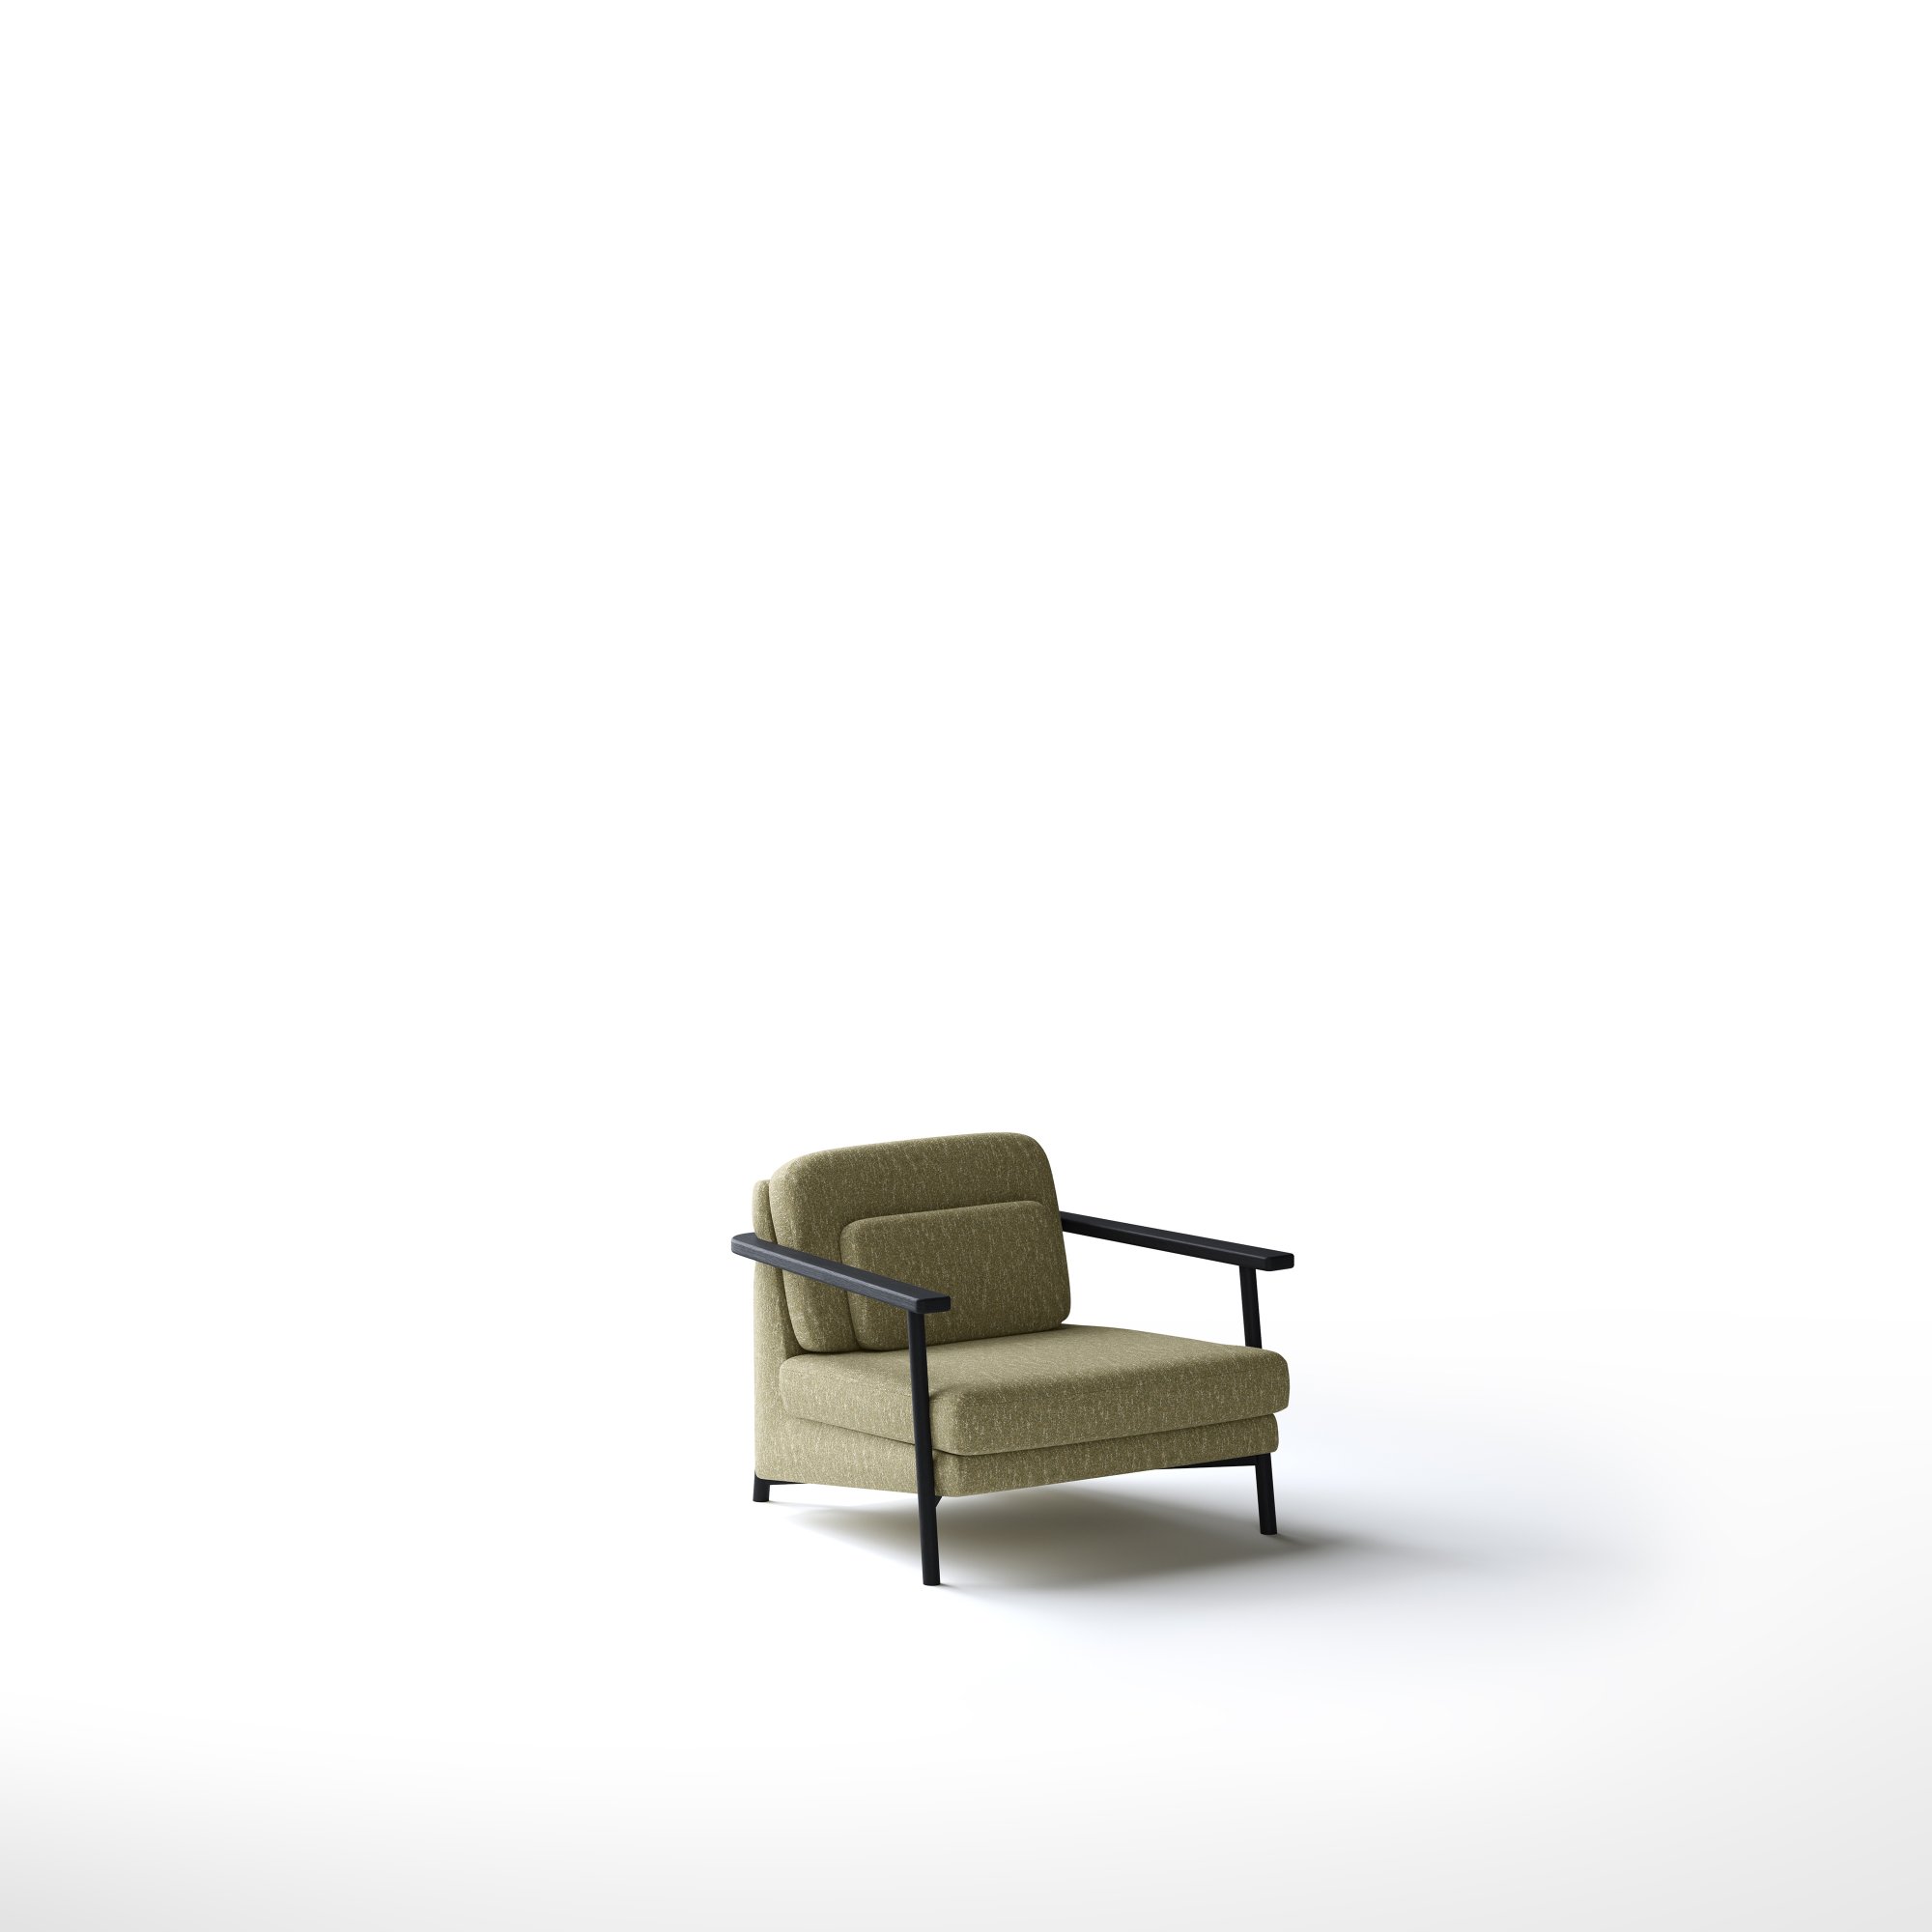 Product_Seating_Manfredi_Vania_01.jpg